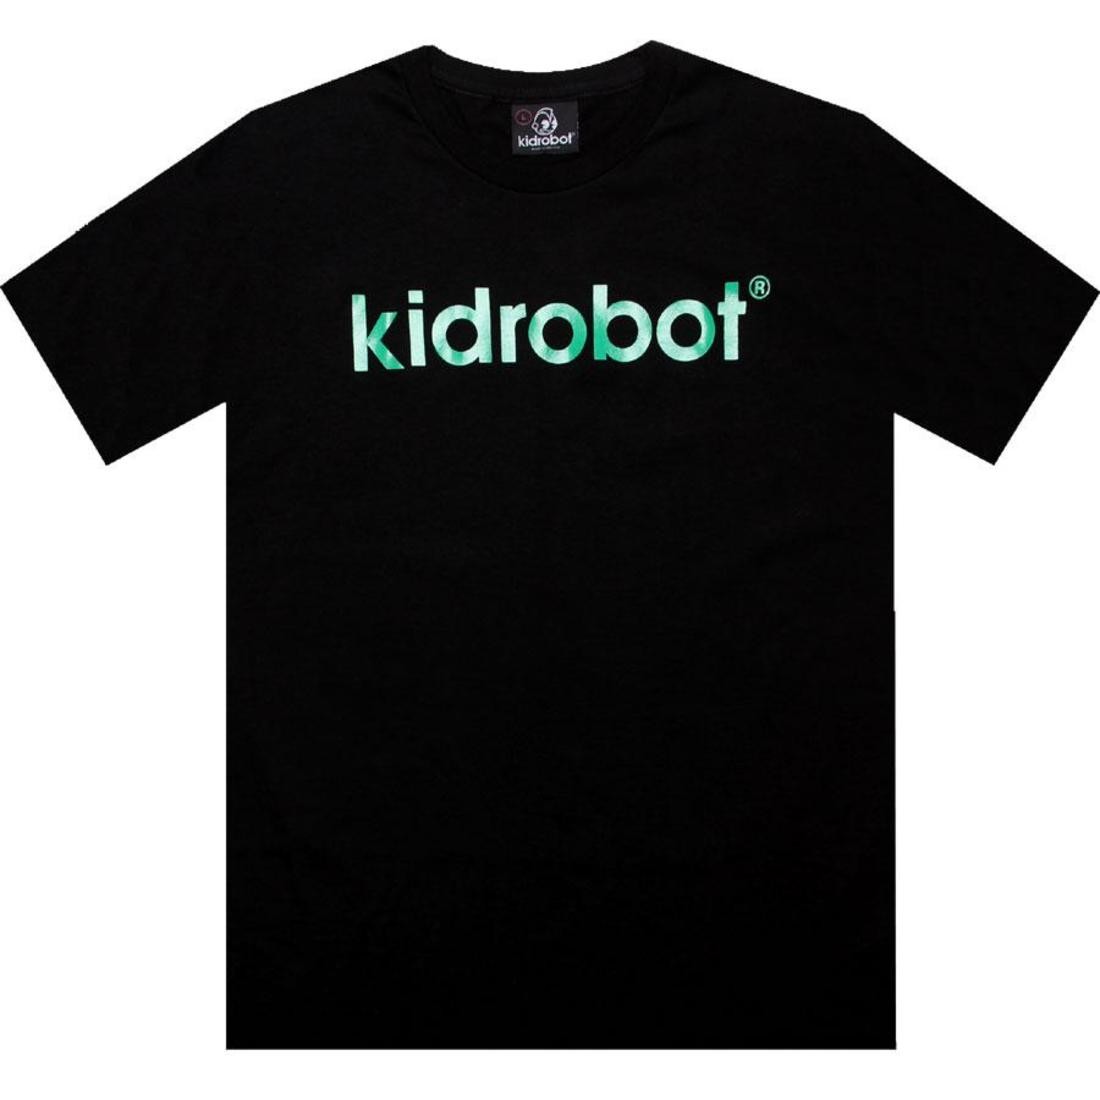 Kidrobot Solid Logo Tee (black / green)